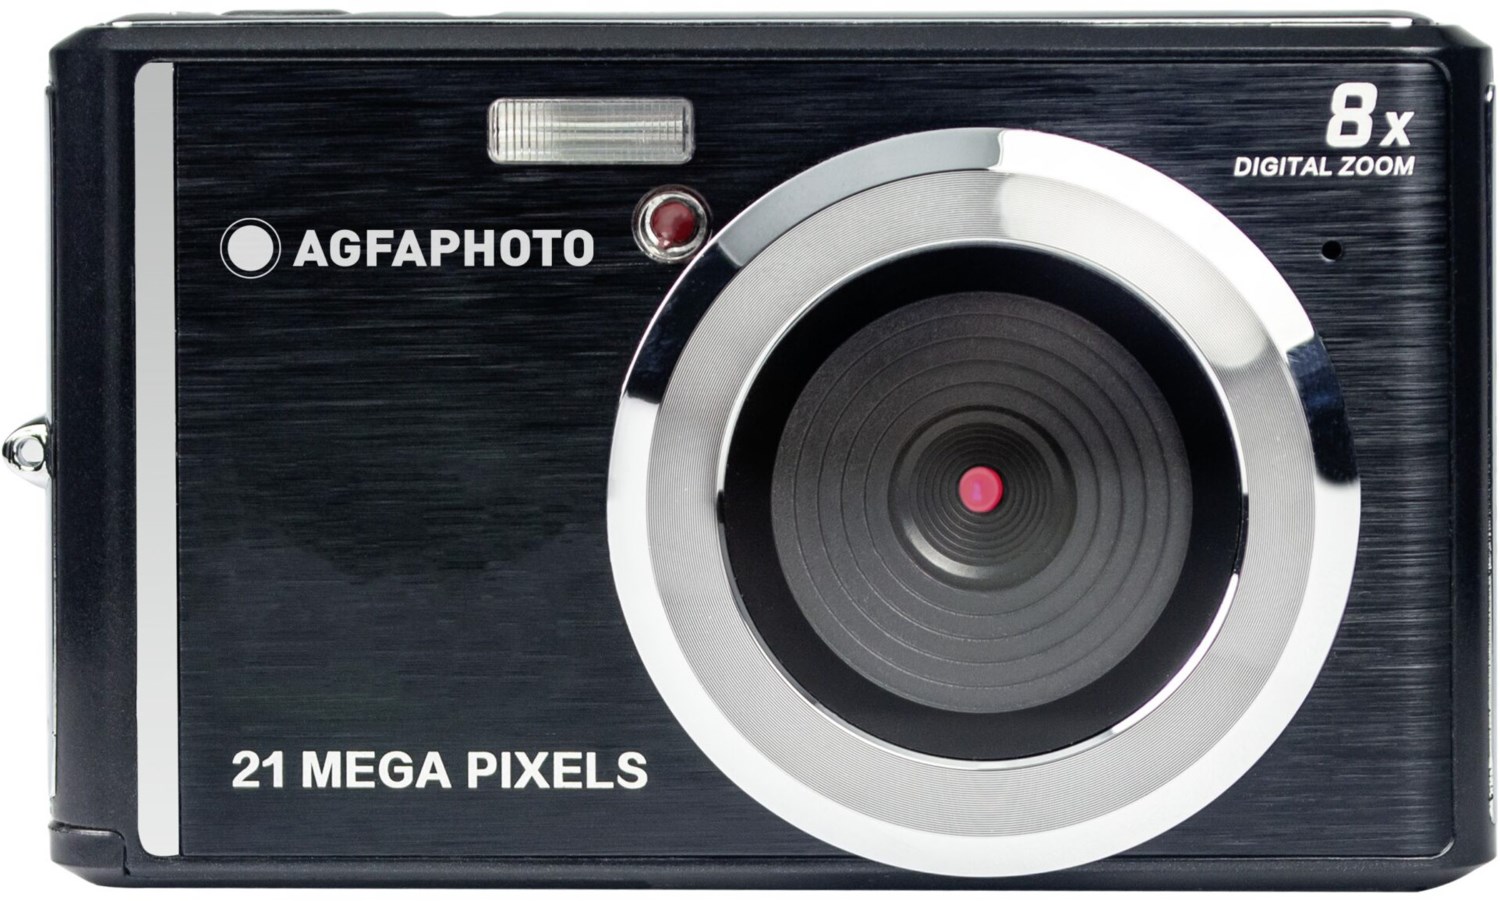 Realishot DC5200 Digitale Kompaktkamera schwarz von Agfaphoto